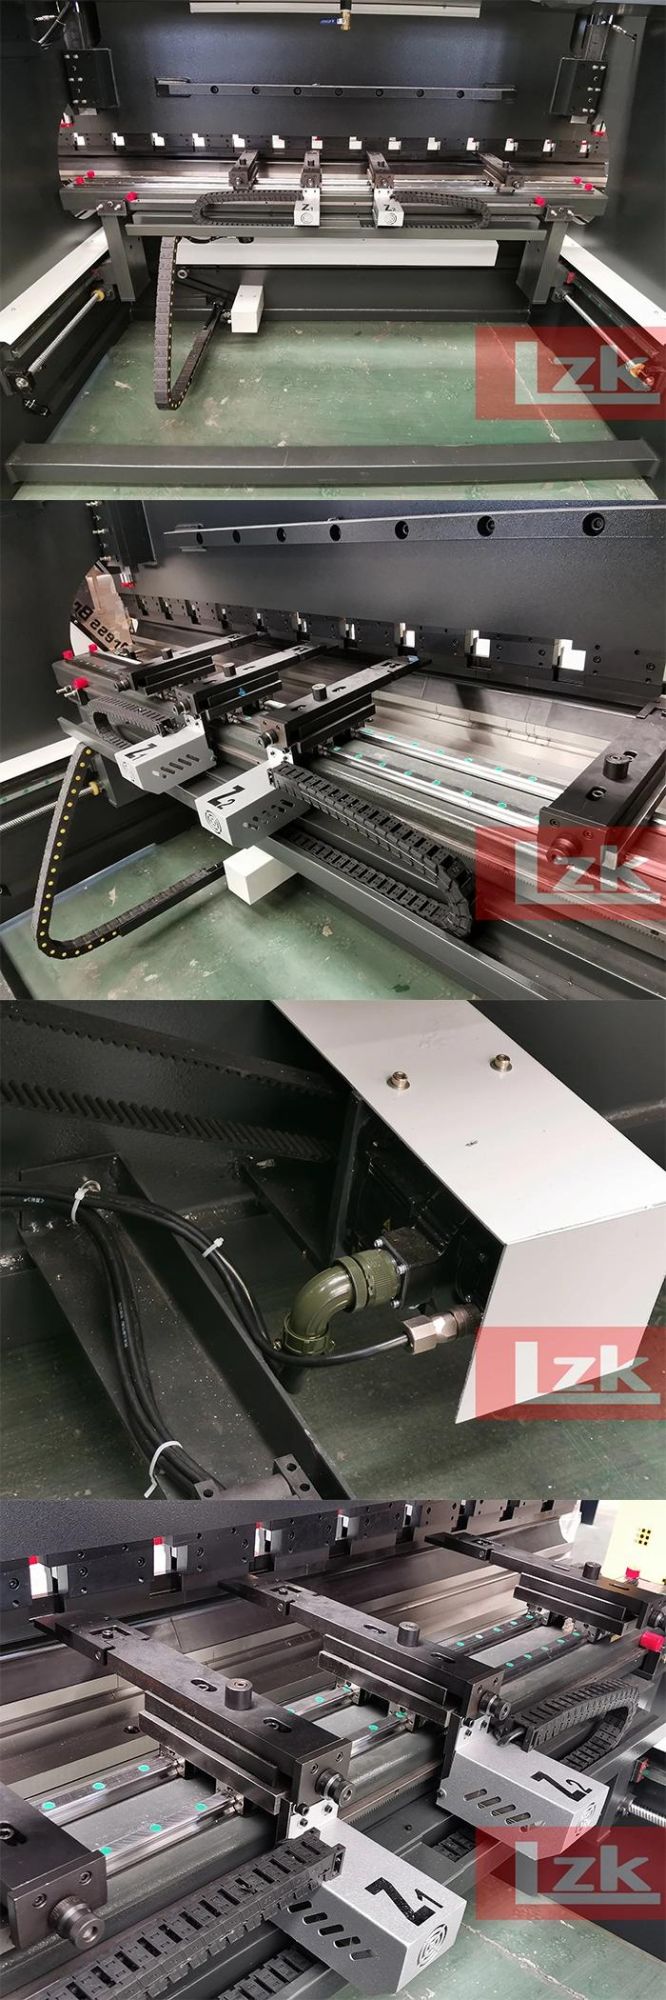 4mm Metal Sheet Hydraulic Bending Press Machine